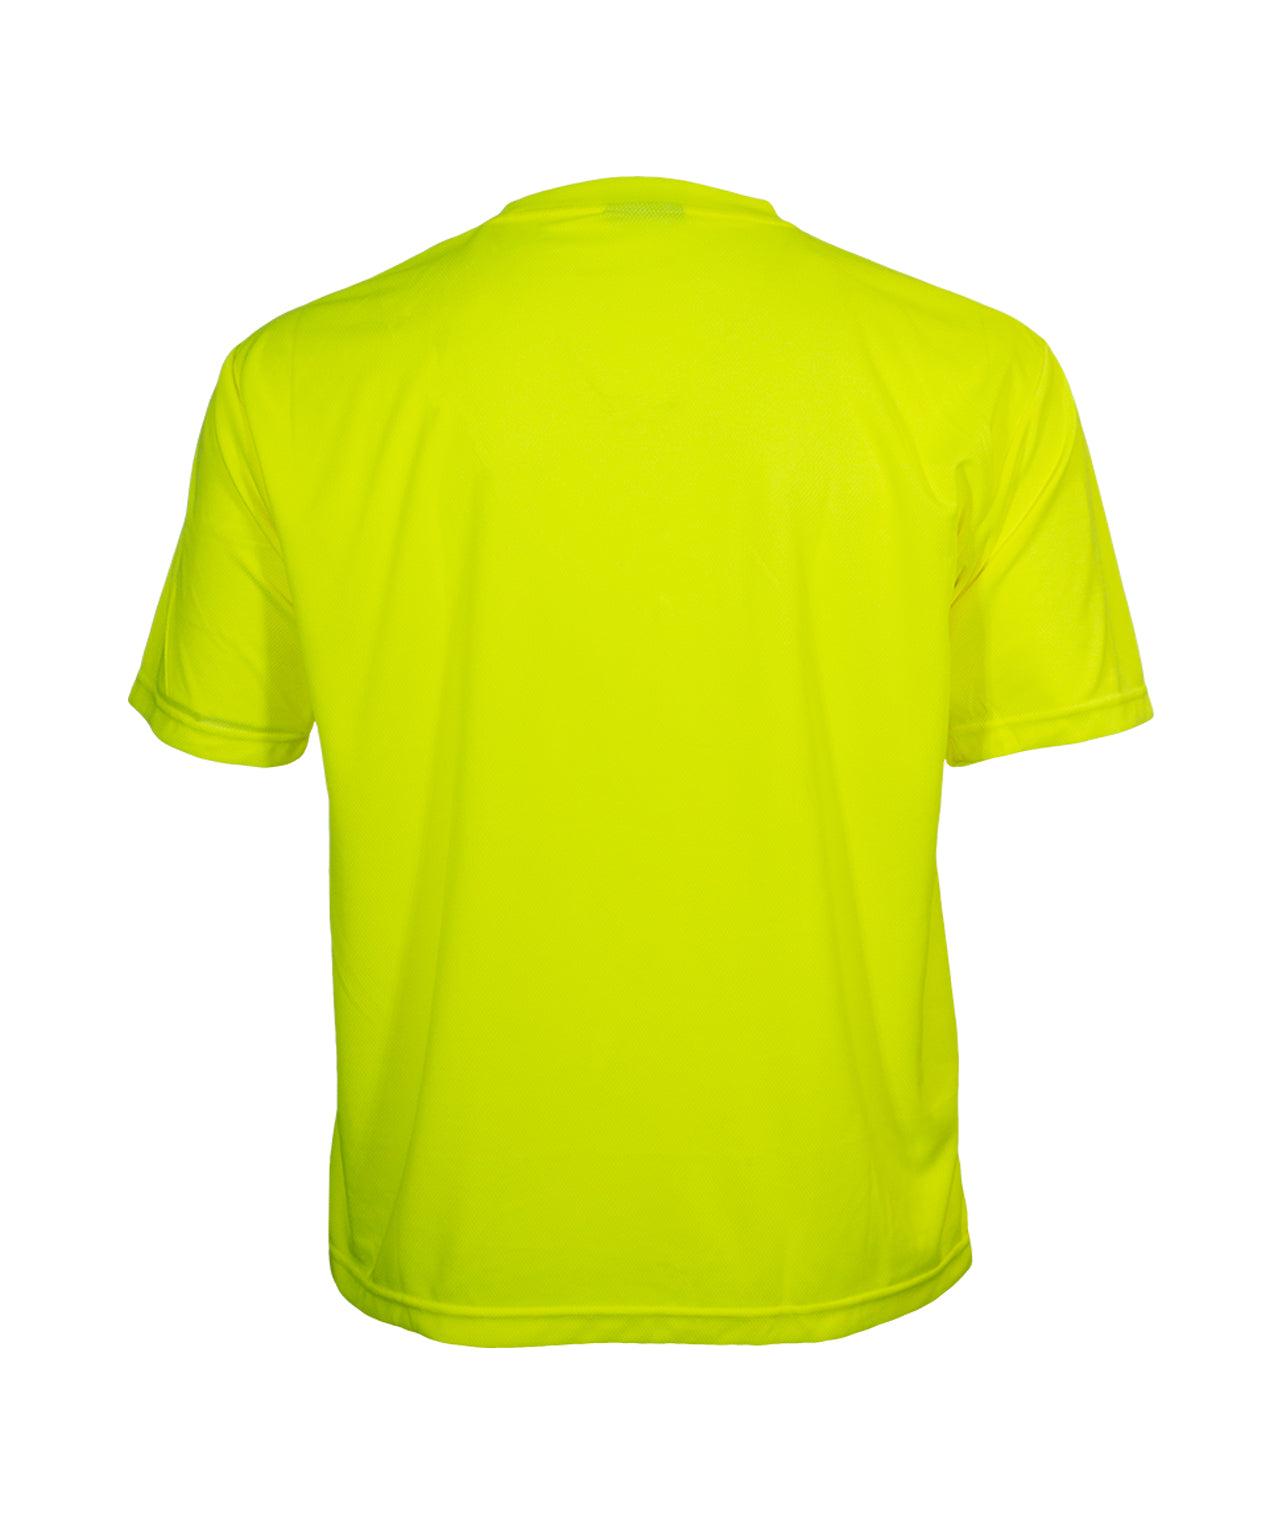 100BNTLM Lightweight Lime Polyester Birdseye Knit High Visibility Pocket  Safety Shirt